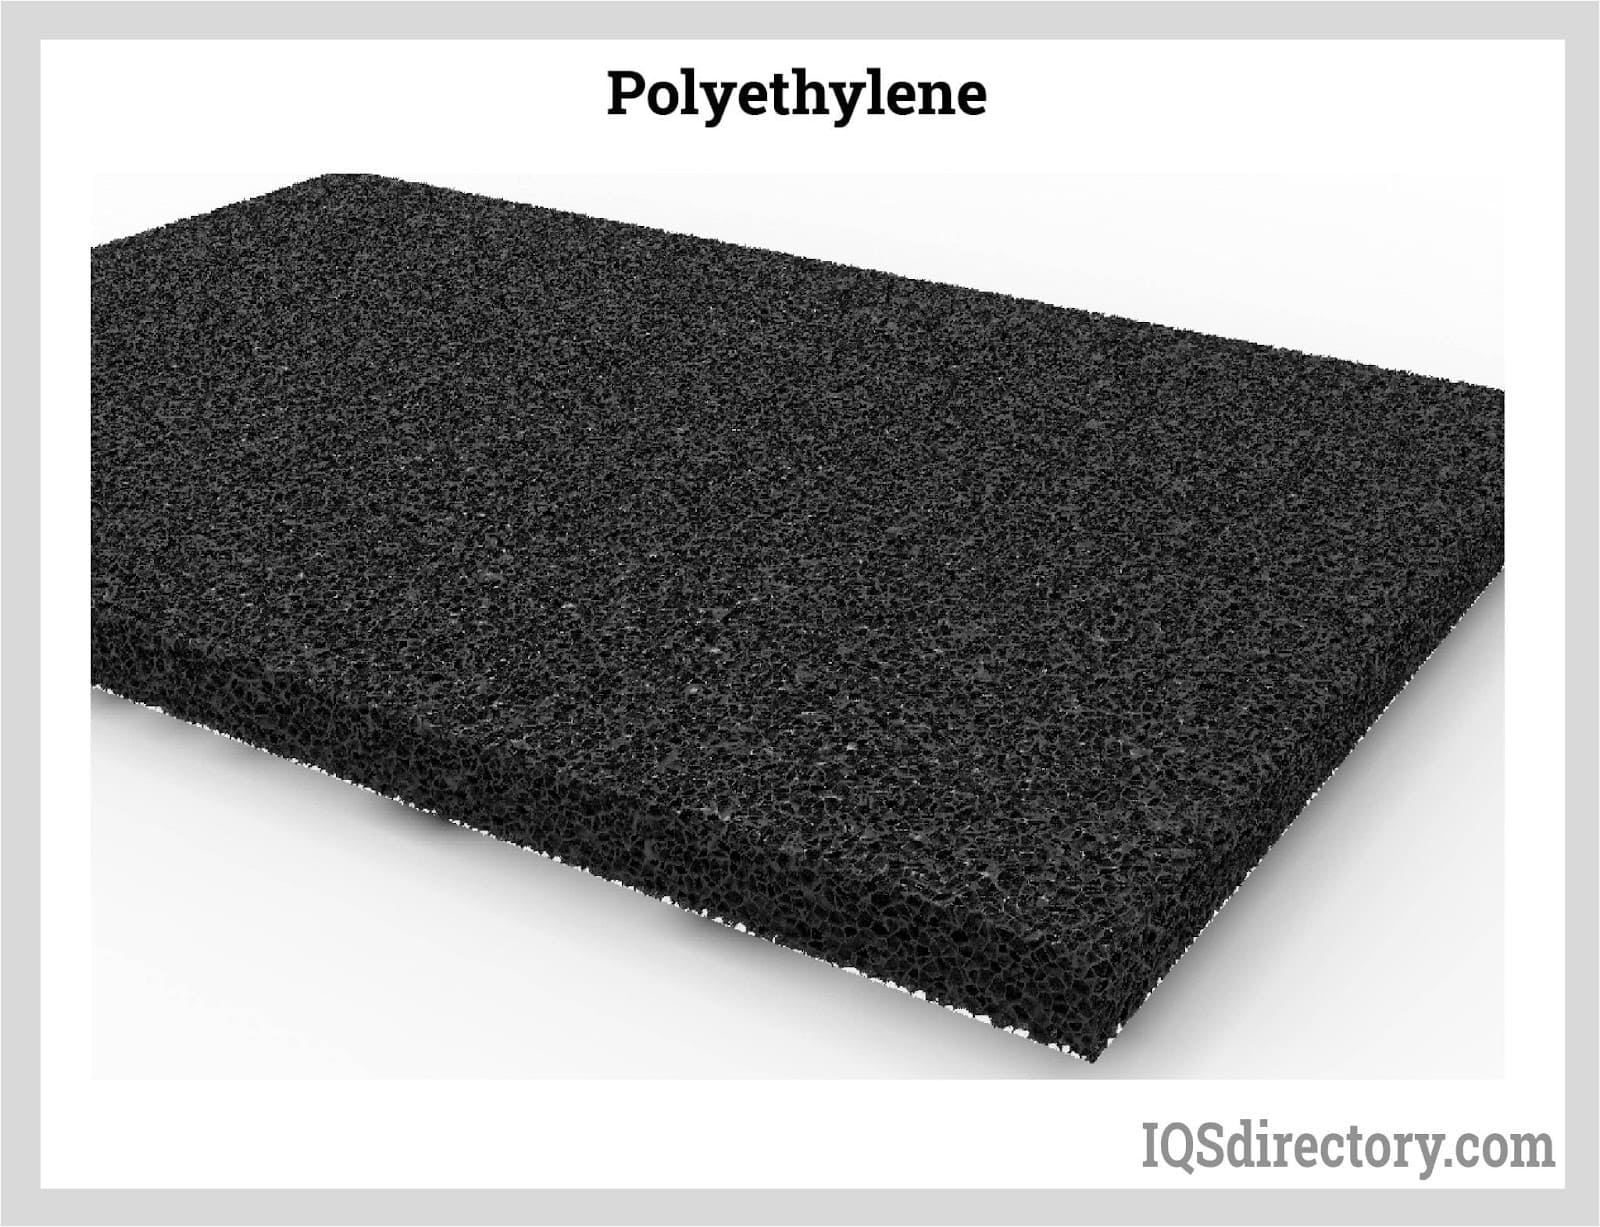 Polyurethane Foam - Uses, Firmness, Weight, Longevity